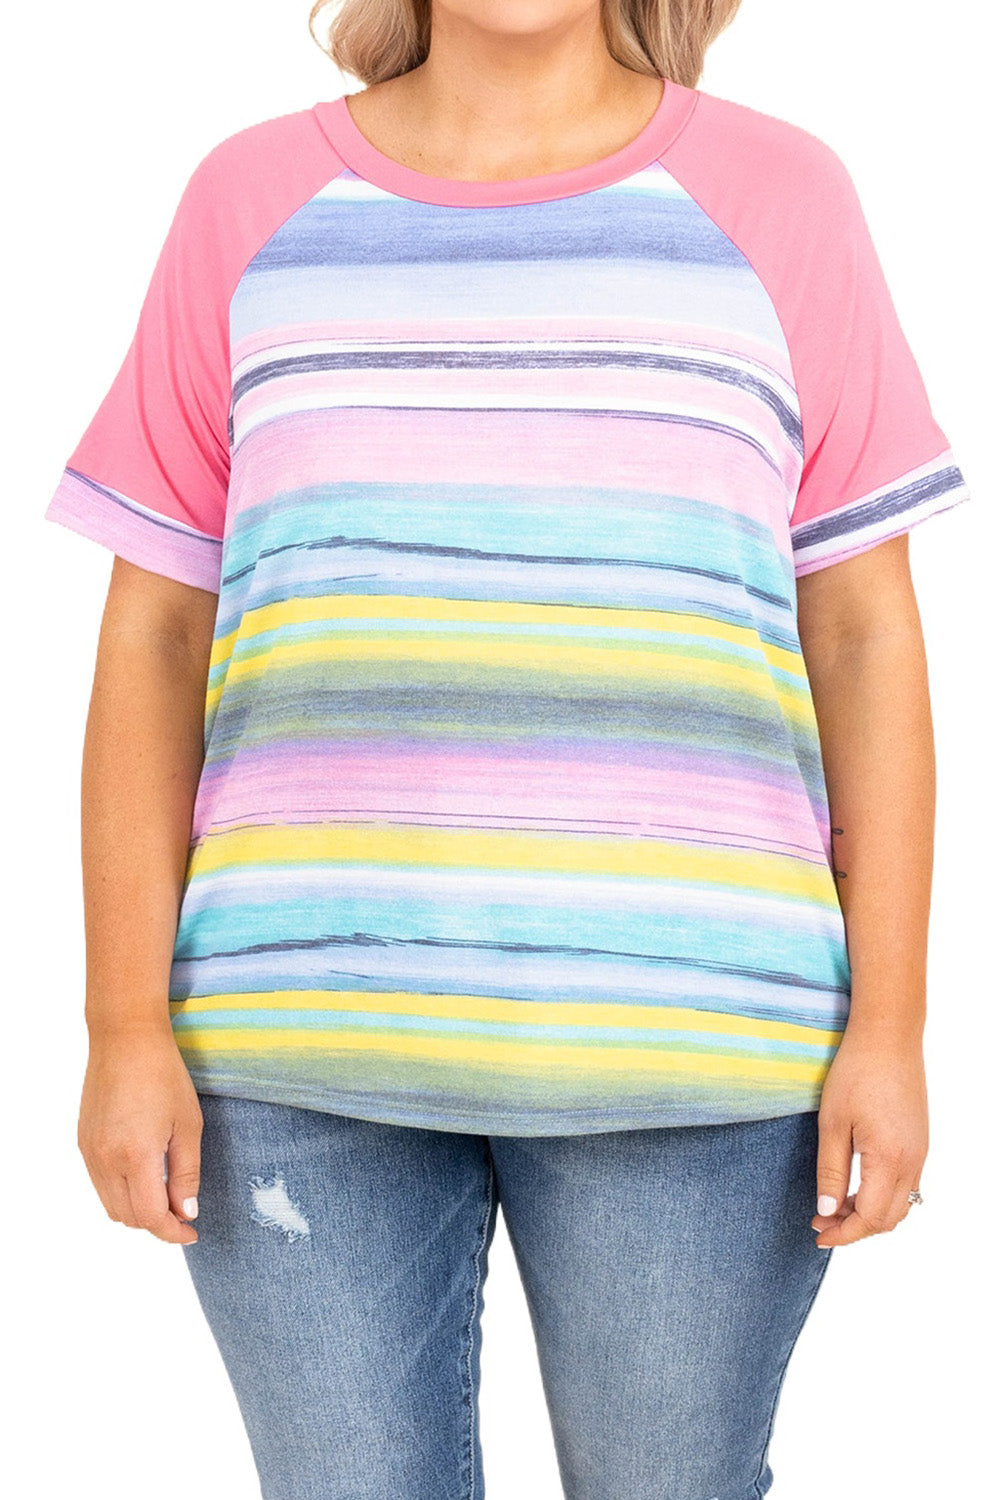 Striped Plus Size Raglan Sleeve Top